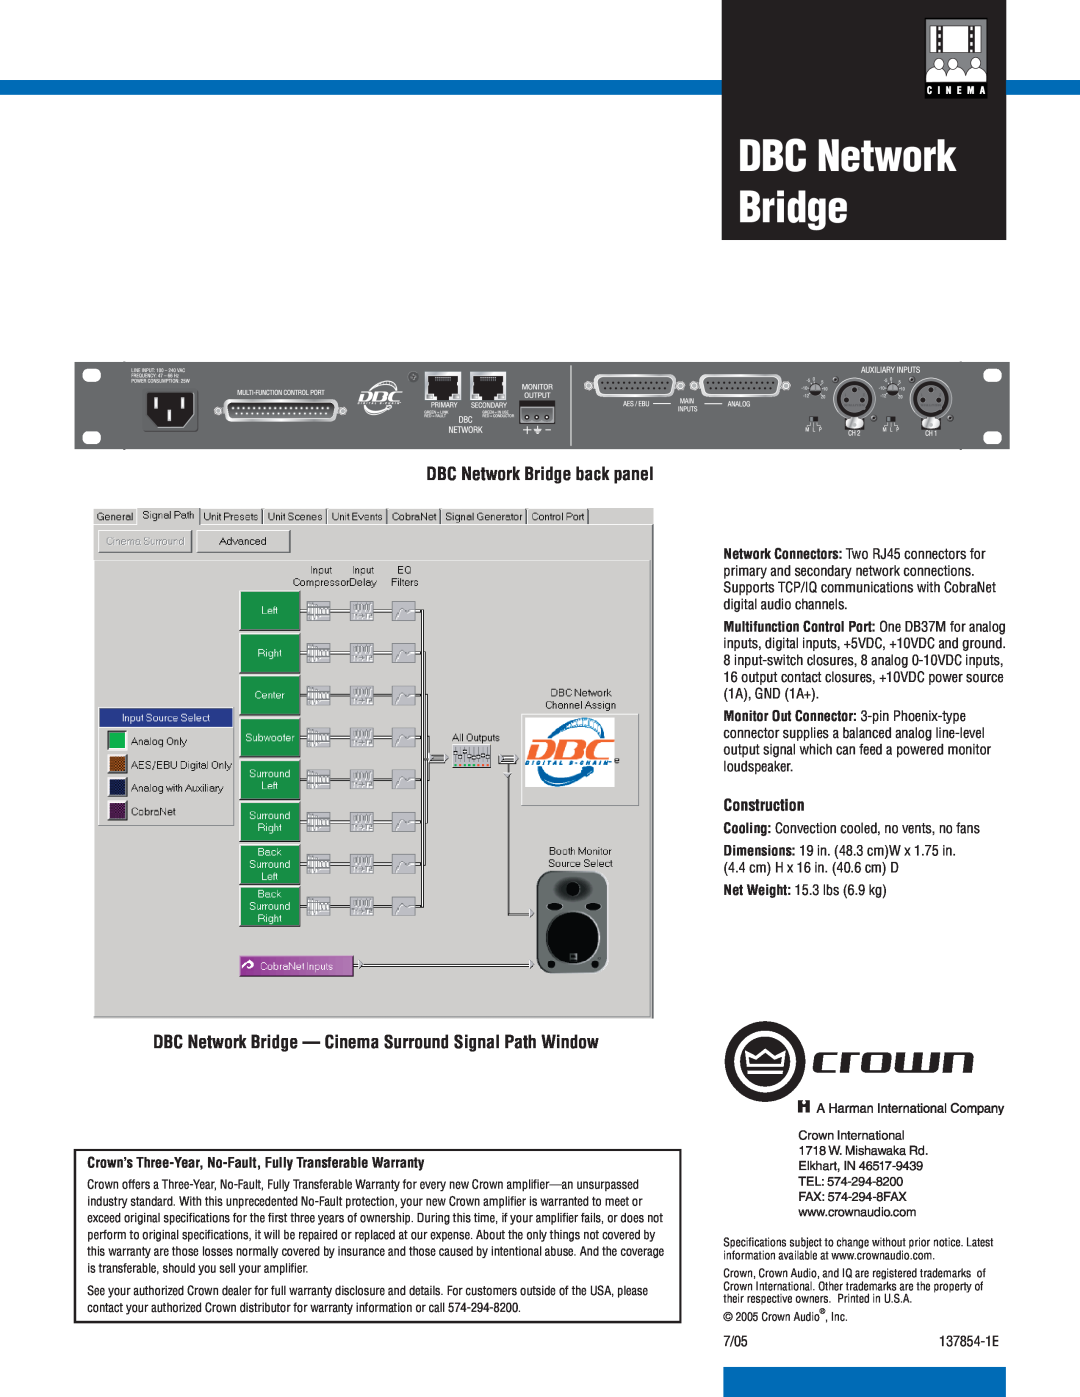 Crown Audio DBC Network Bridge back panel, DBC Network Bridge - Cinema Surround Signal Path Window, Construction 